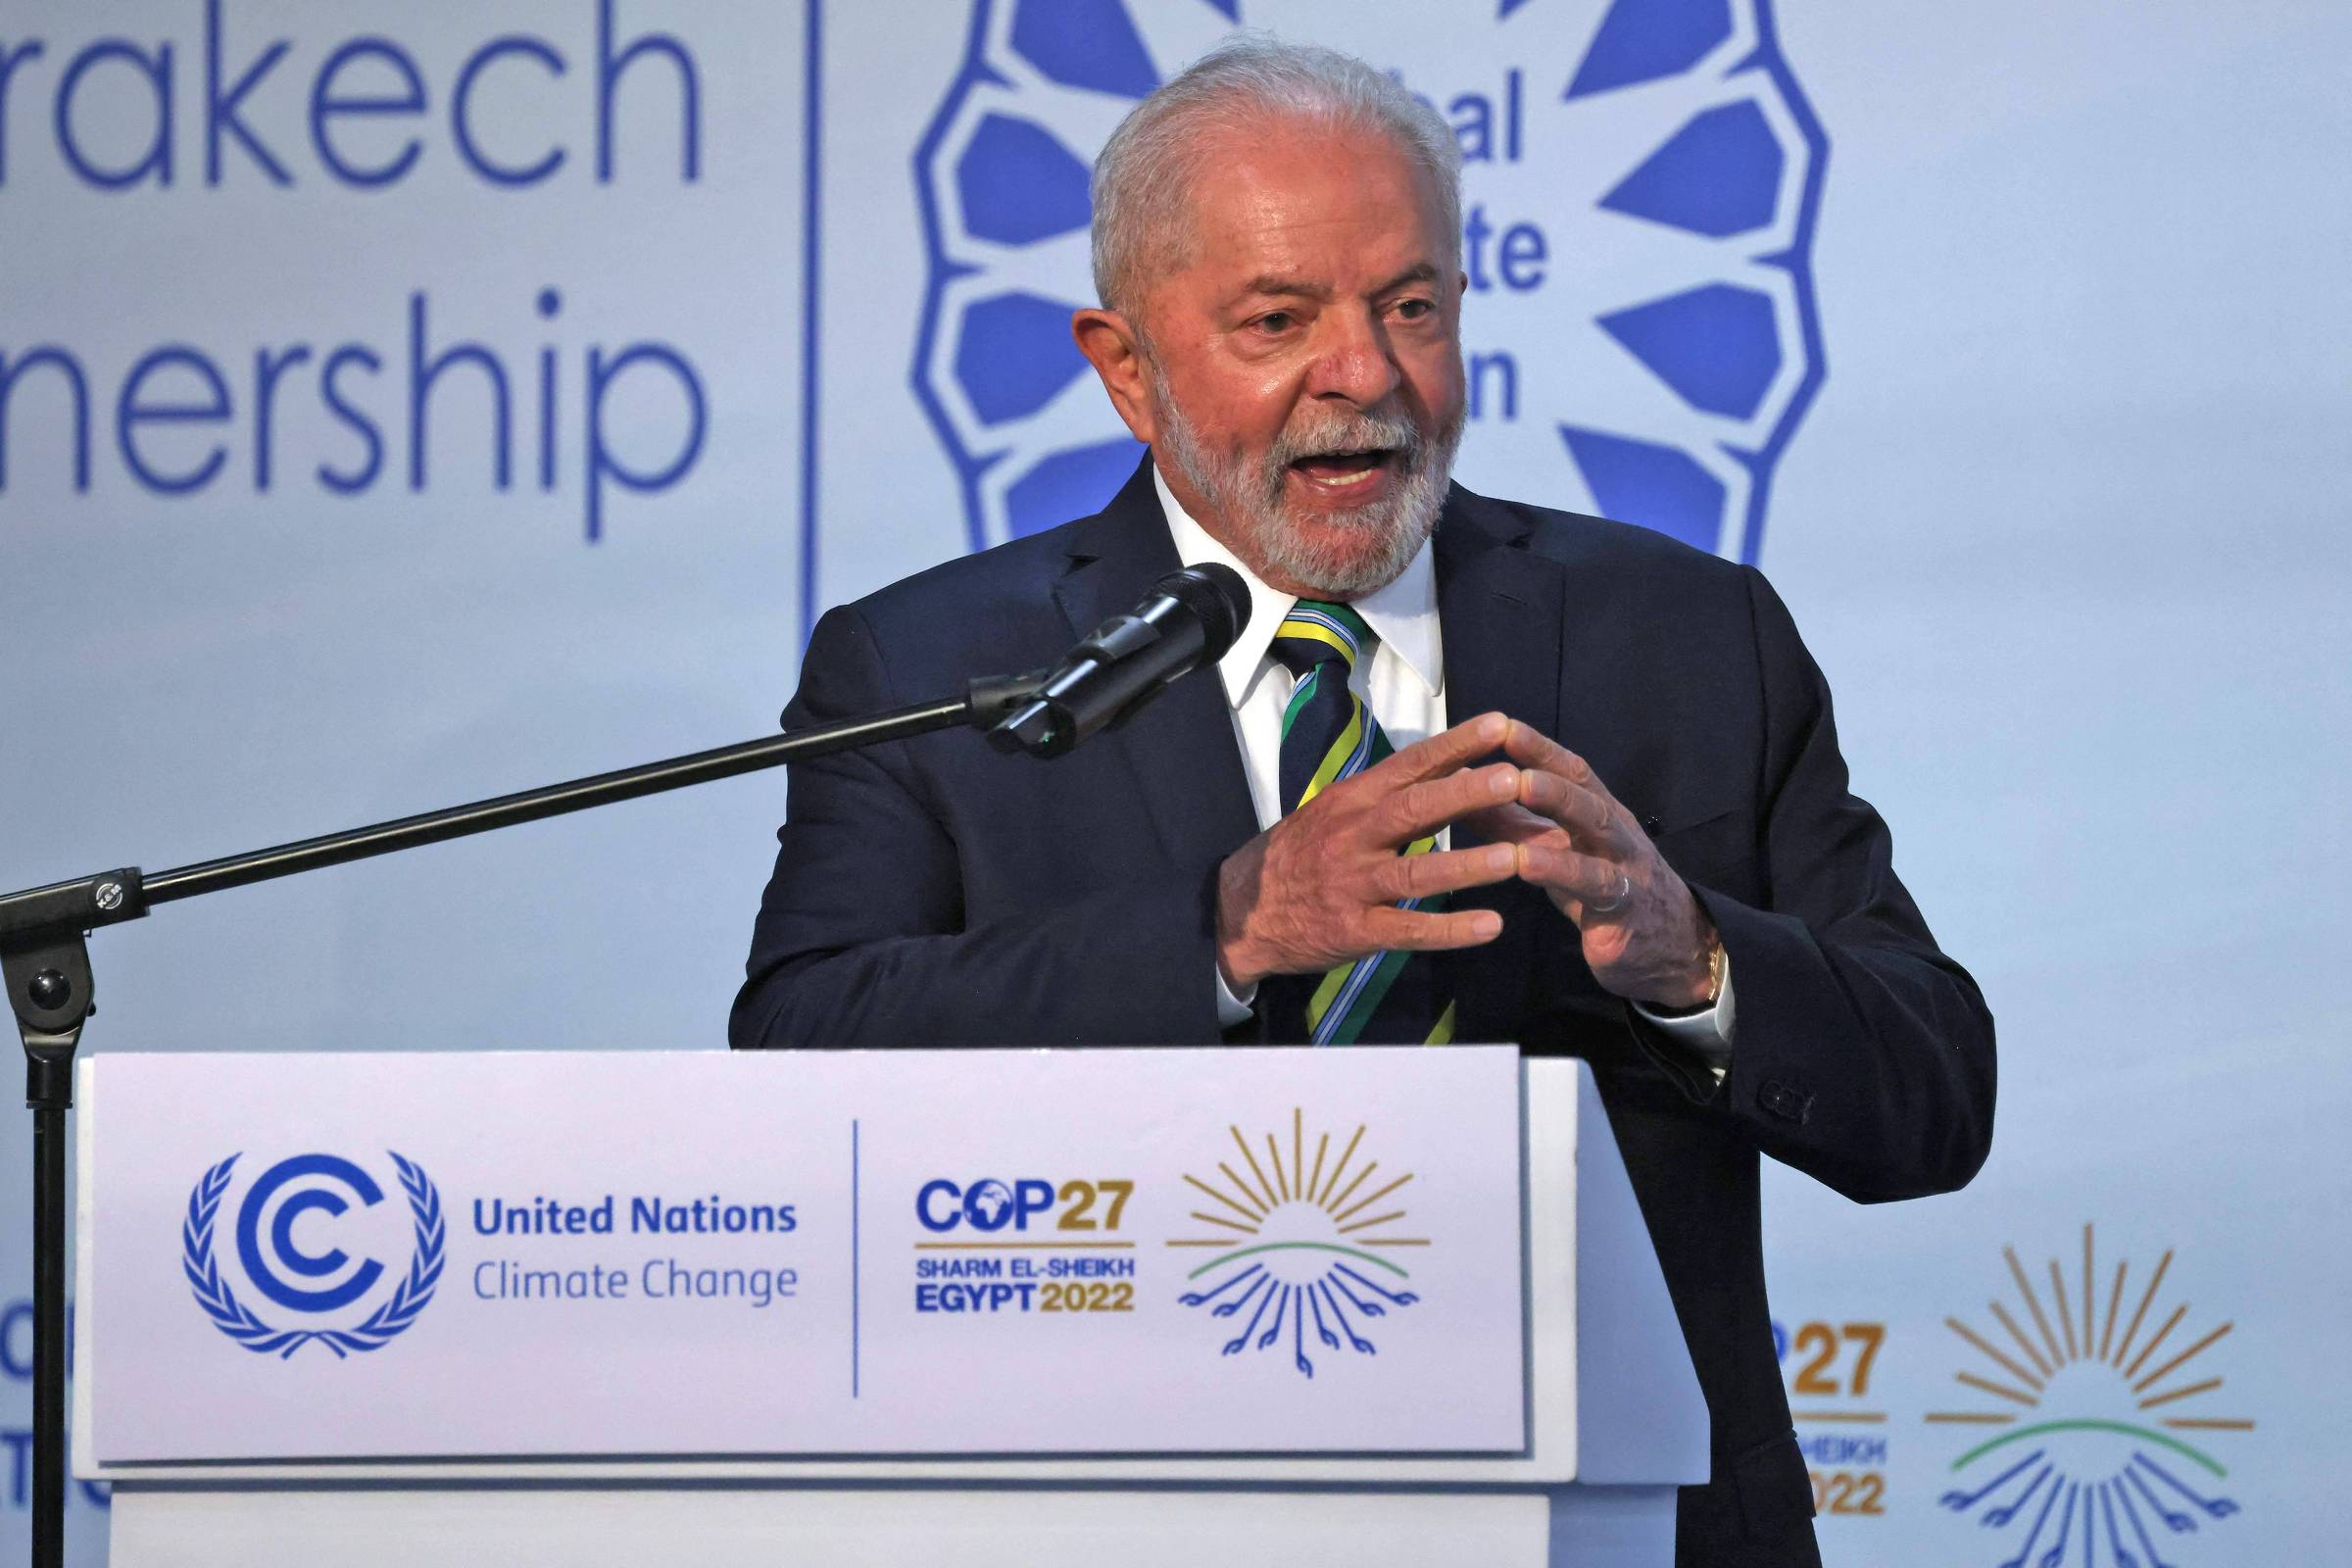 Lula discursa na COP-27 e é aplaudido de pé: “O Brasil está de volta!”